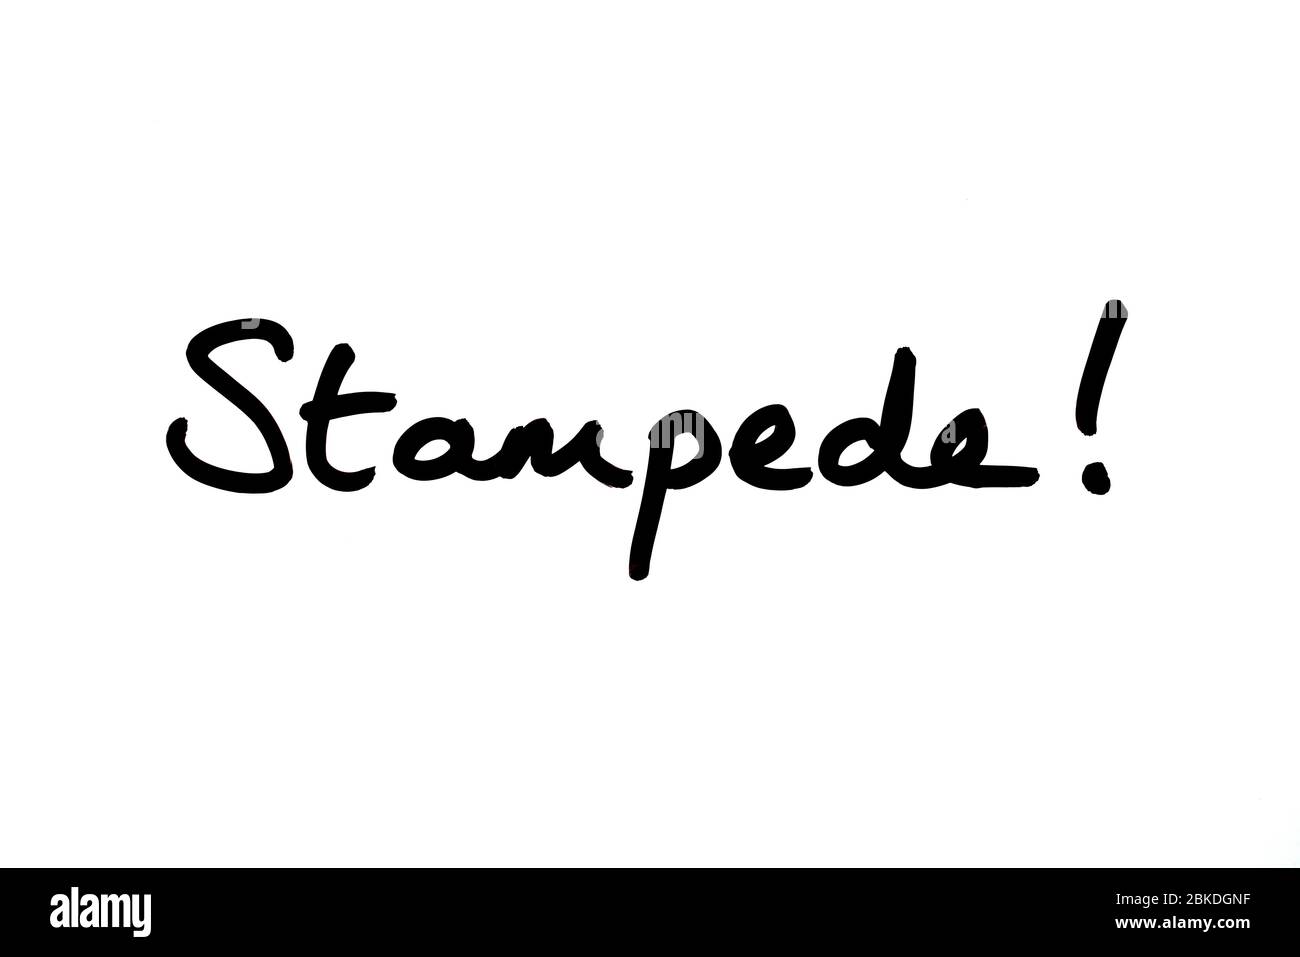 Stampede! handwritten on a white background. Stock Photo